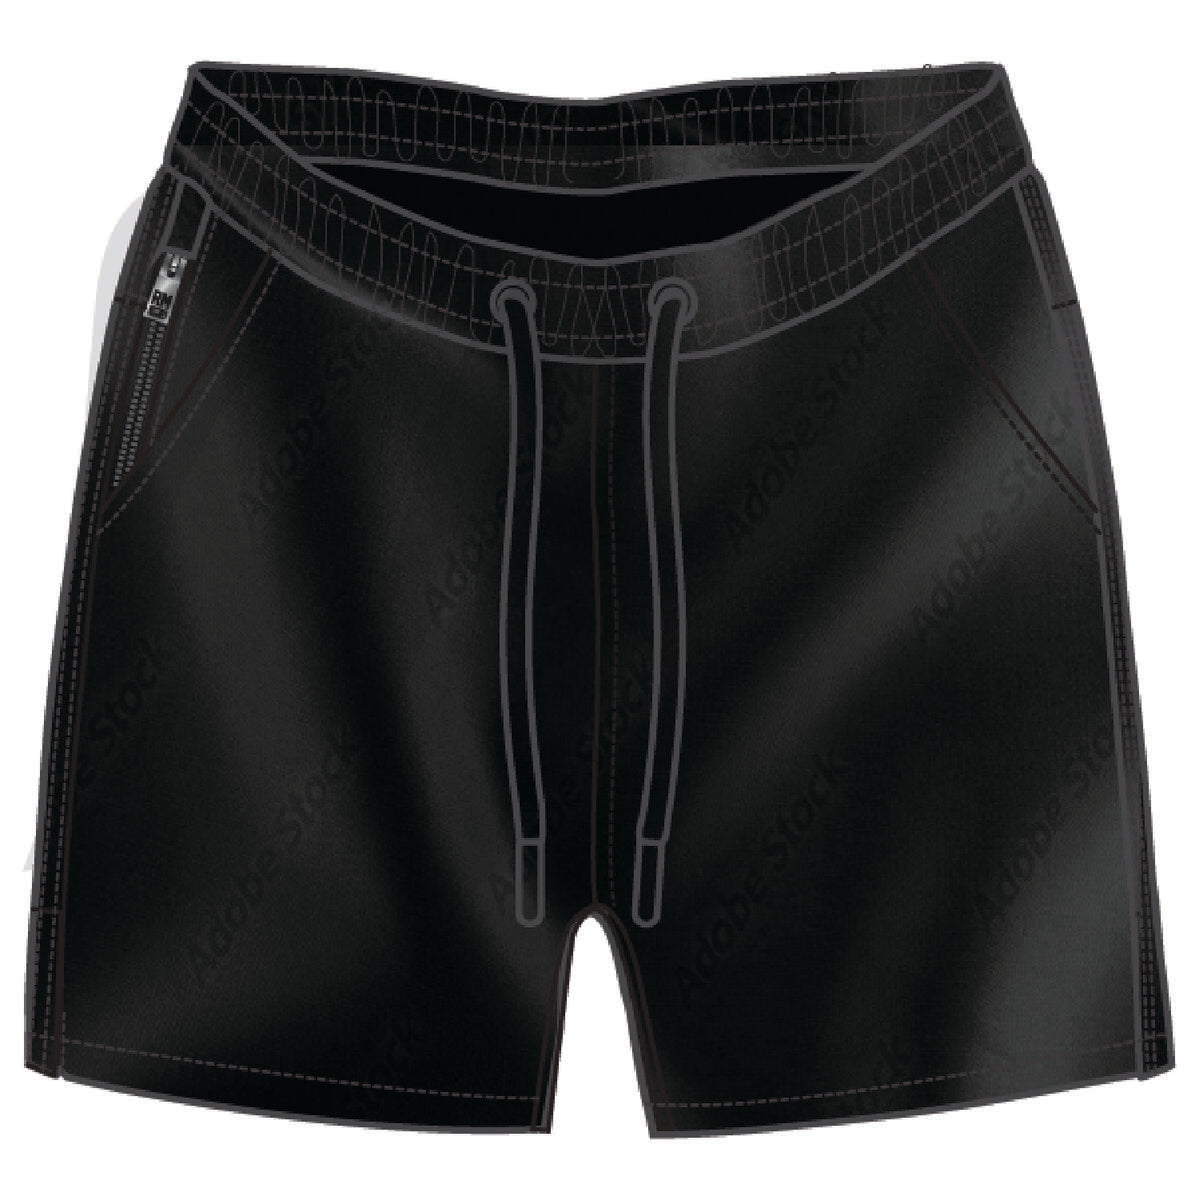 RingSpung Black Nylon Shorts